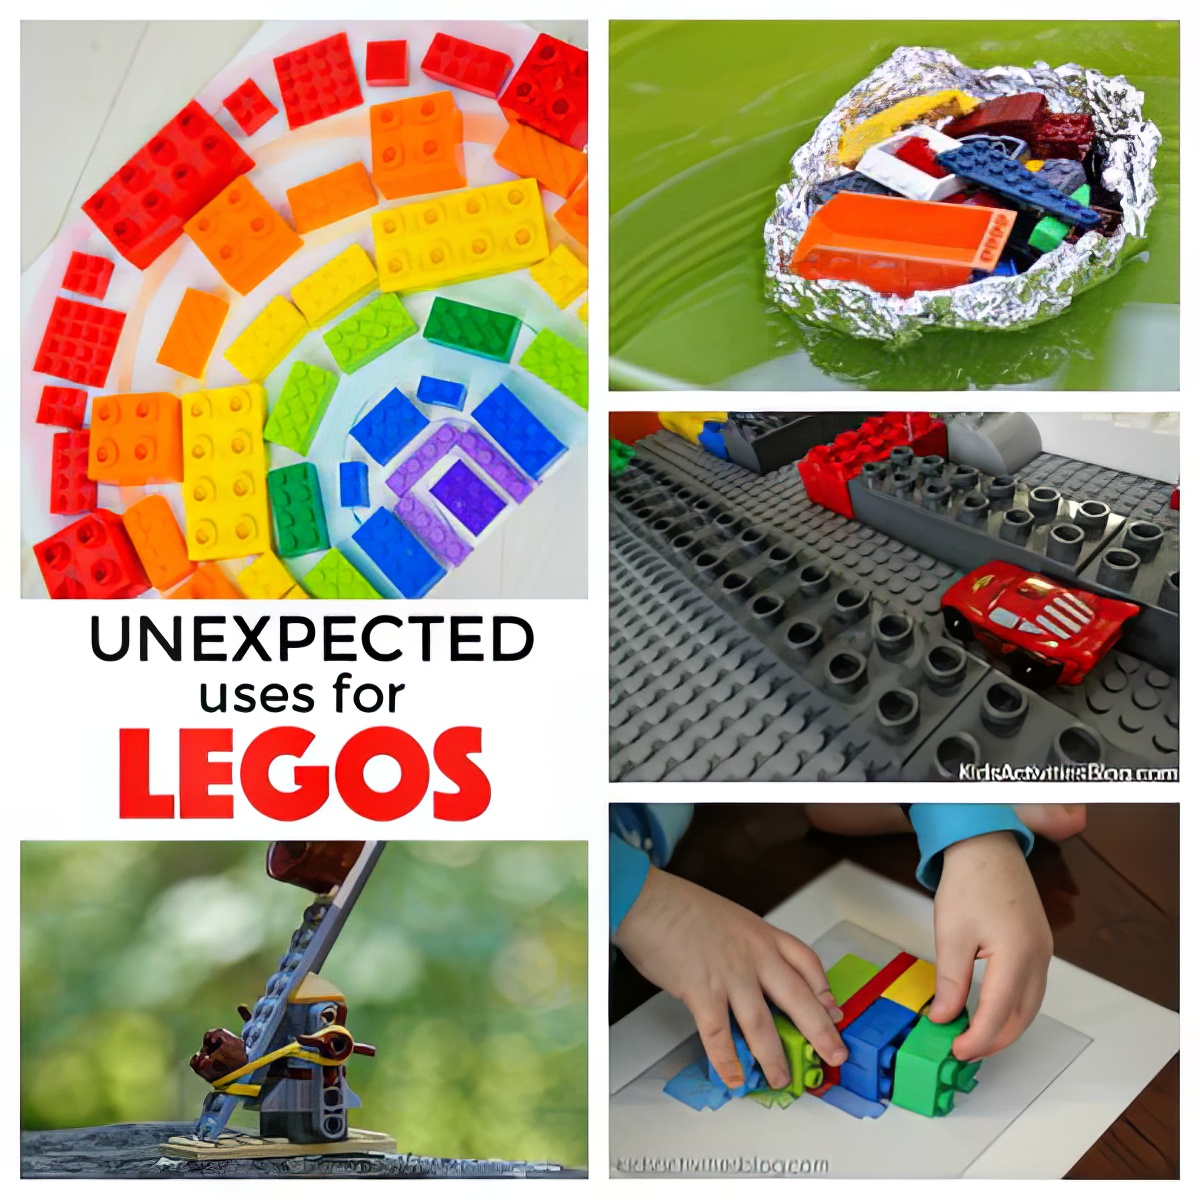 11 Unexpected Ways to Use LEGOs, playing legos, Creative legos, colorful lego crafts